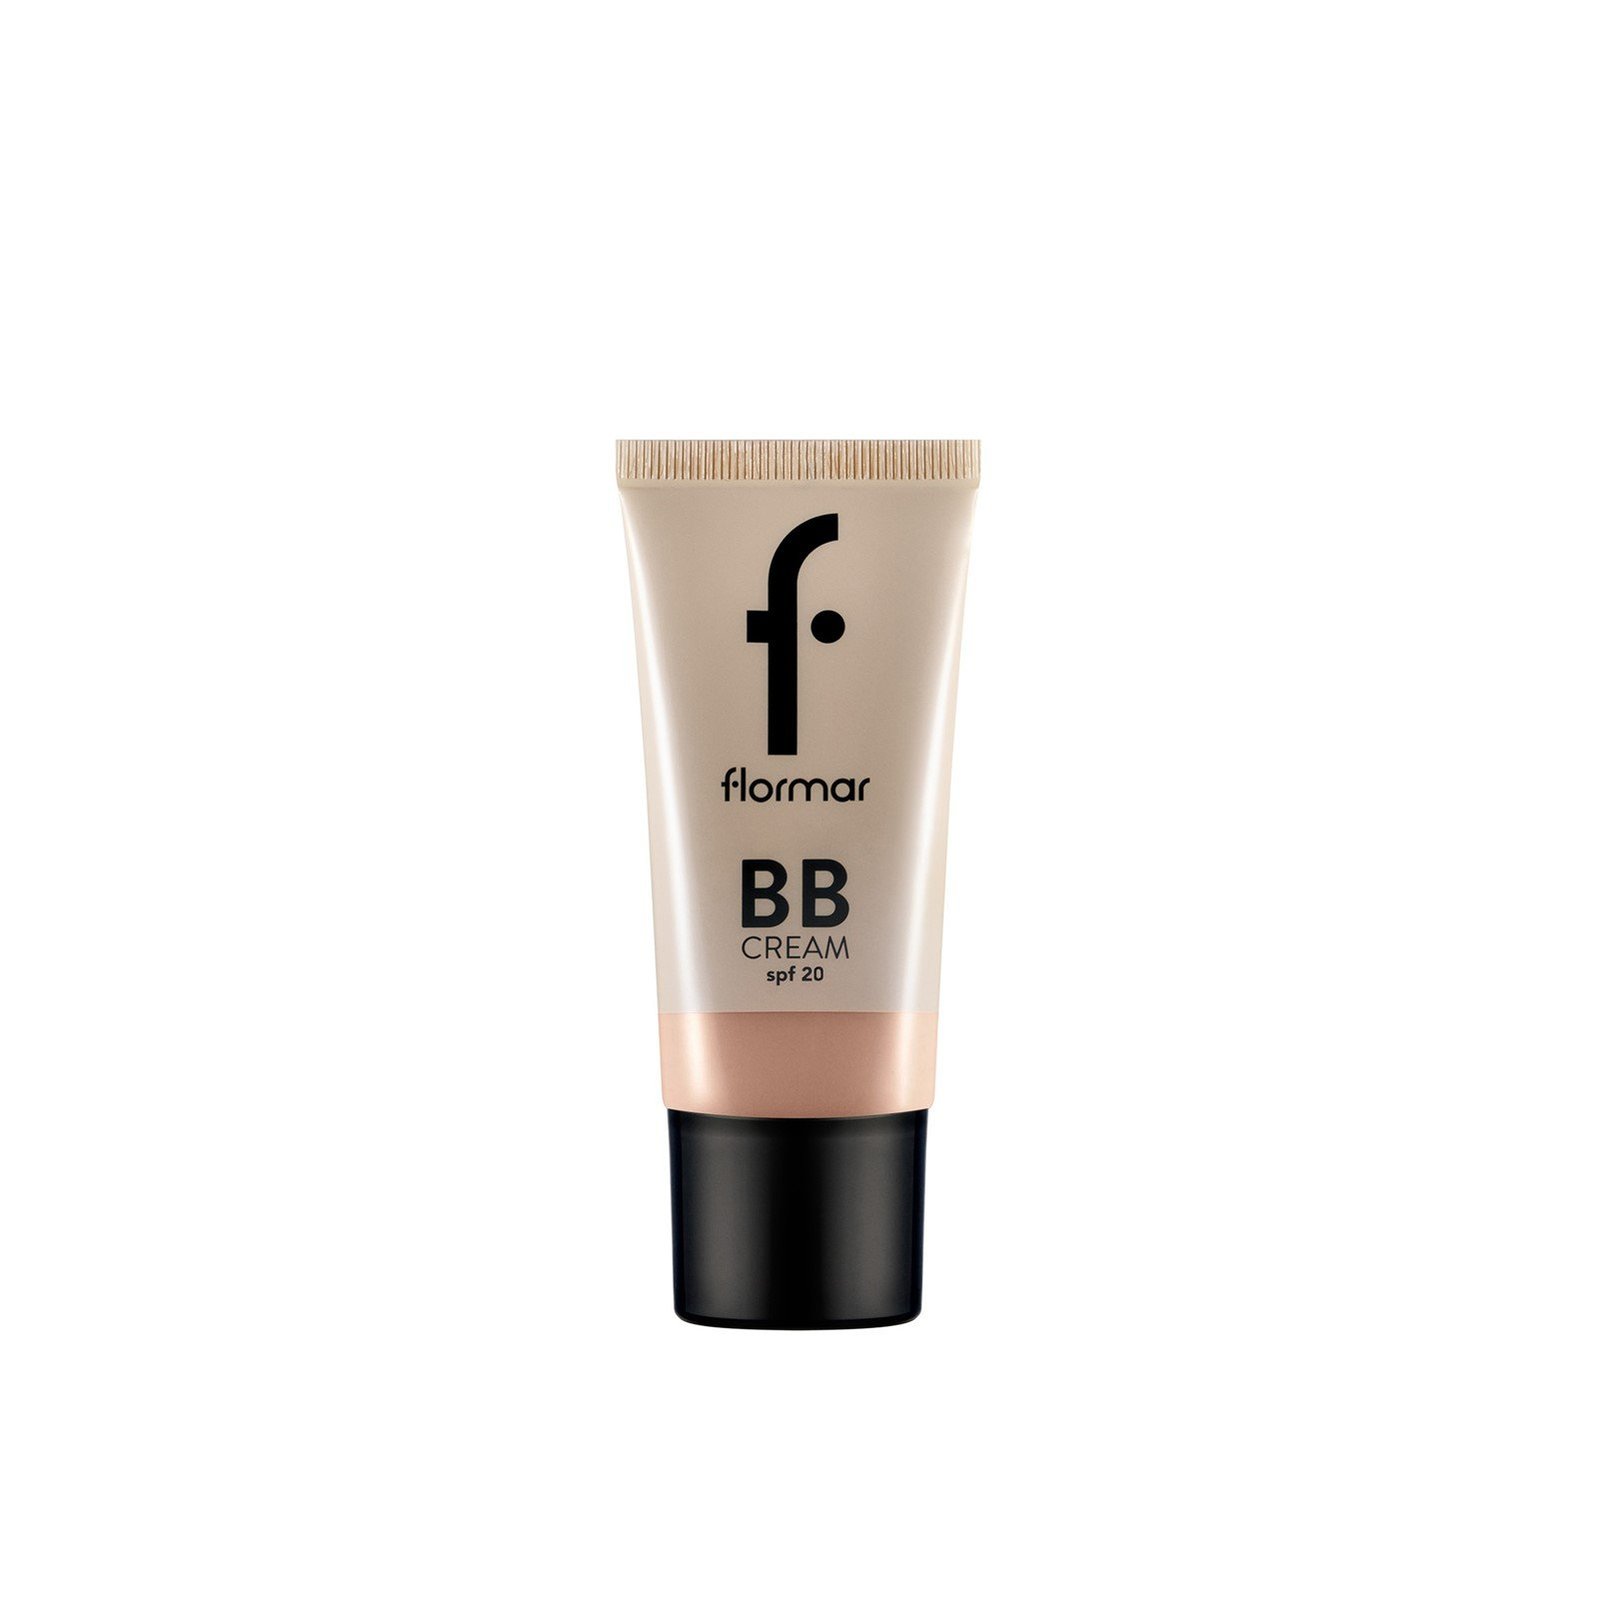 Flormar BB Cream SPF20 04 Light/Medium 35ml (1.18floz)